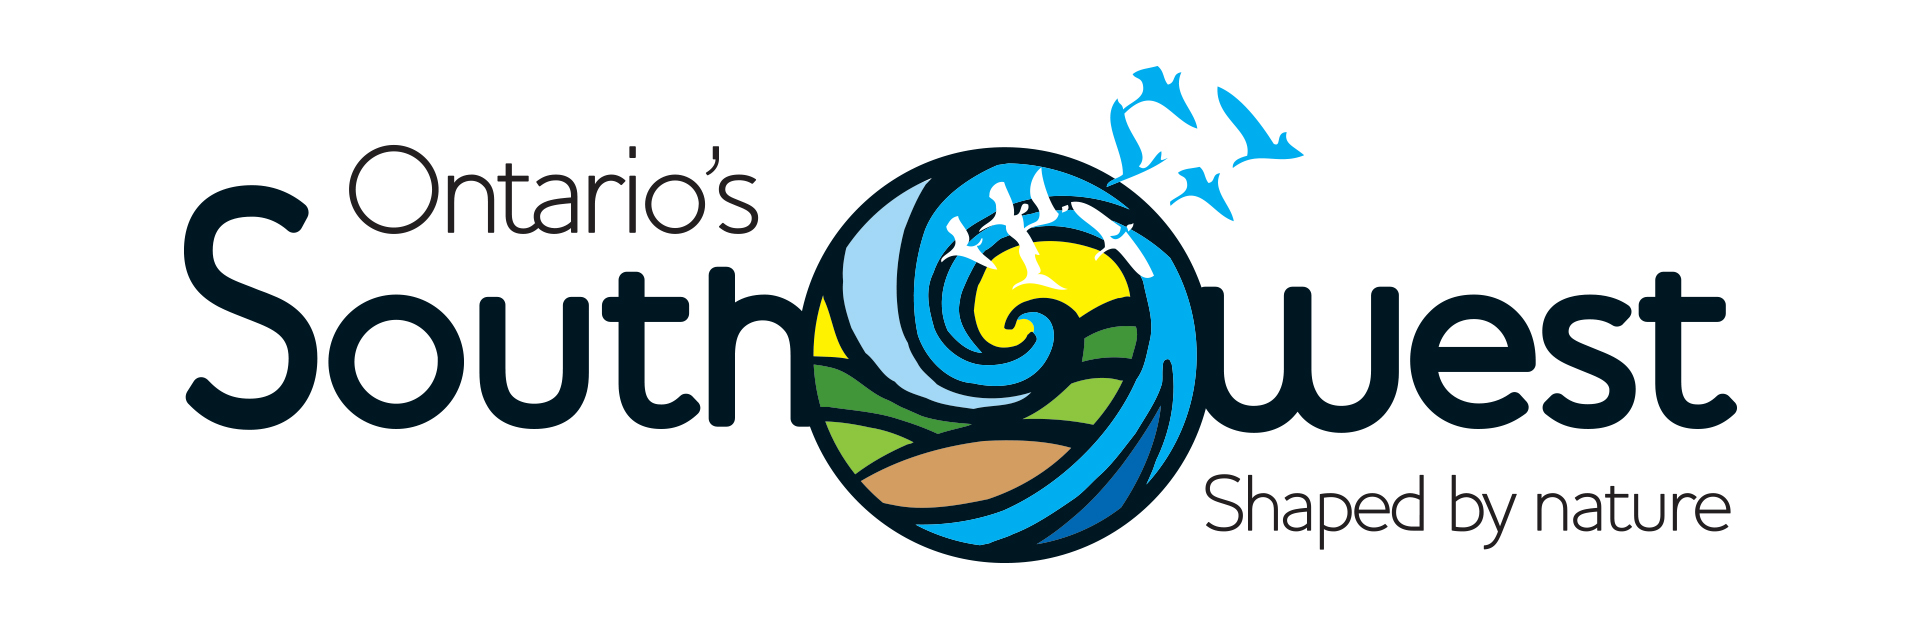 southwest ontario tourism corporation logo